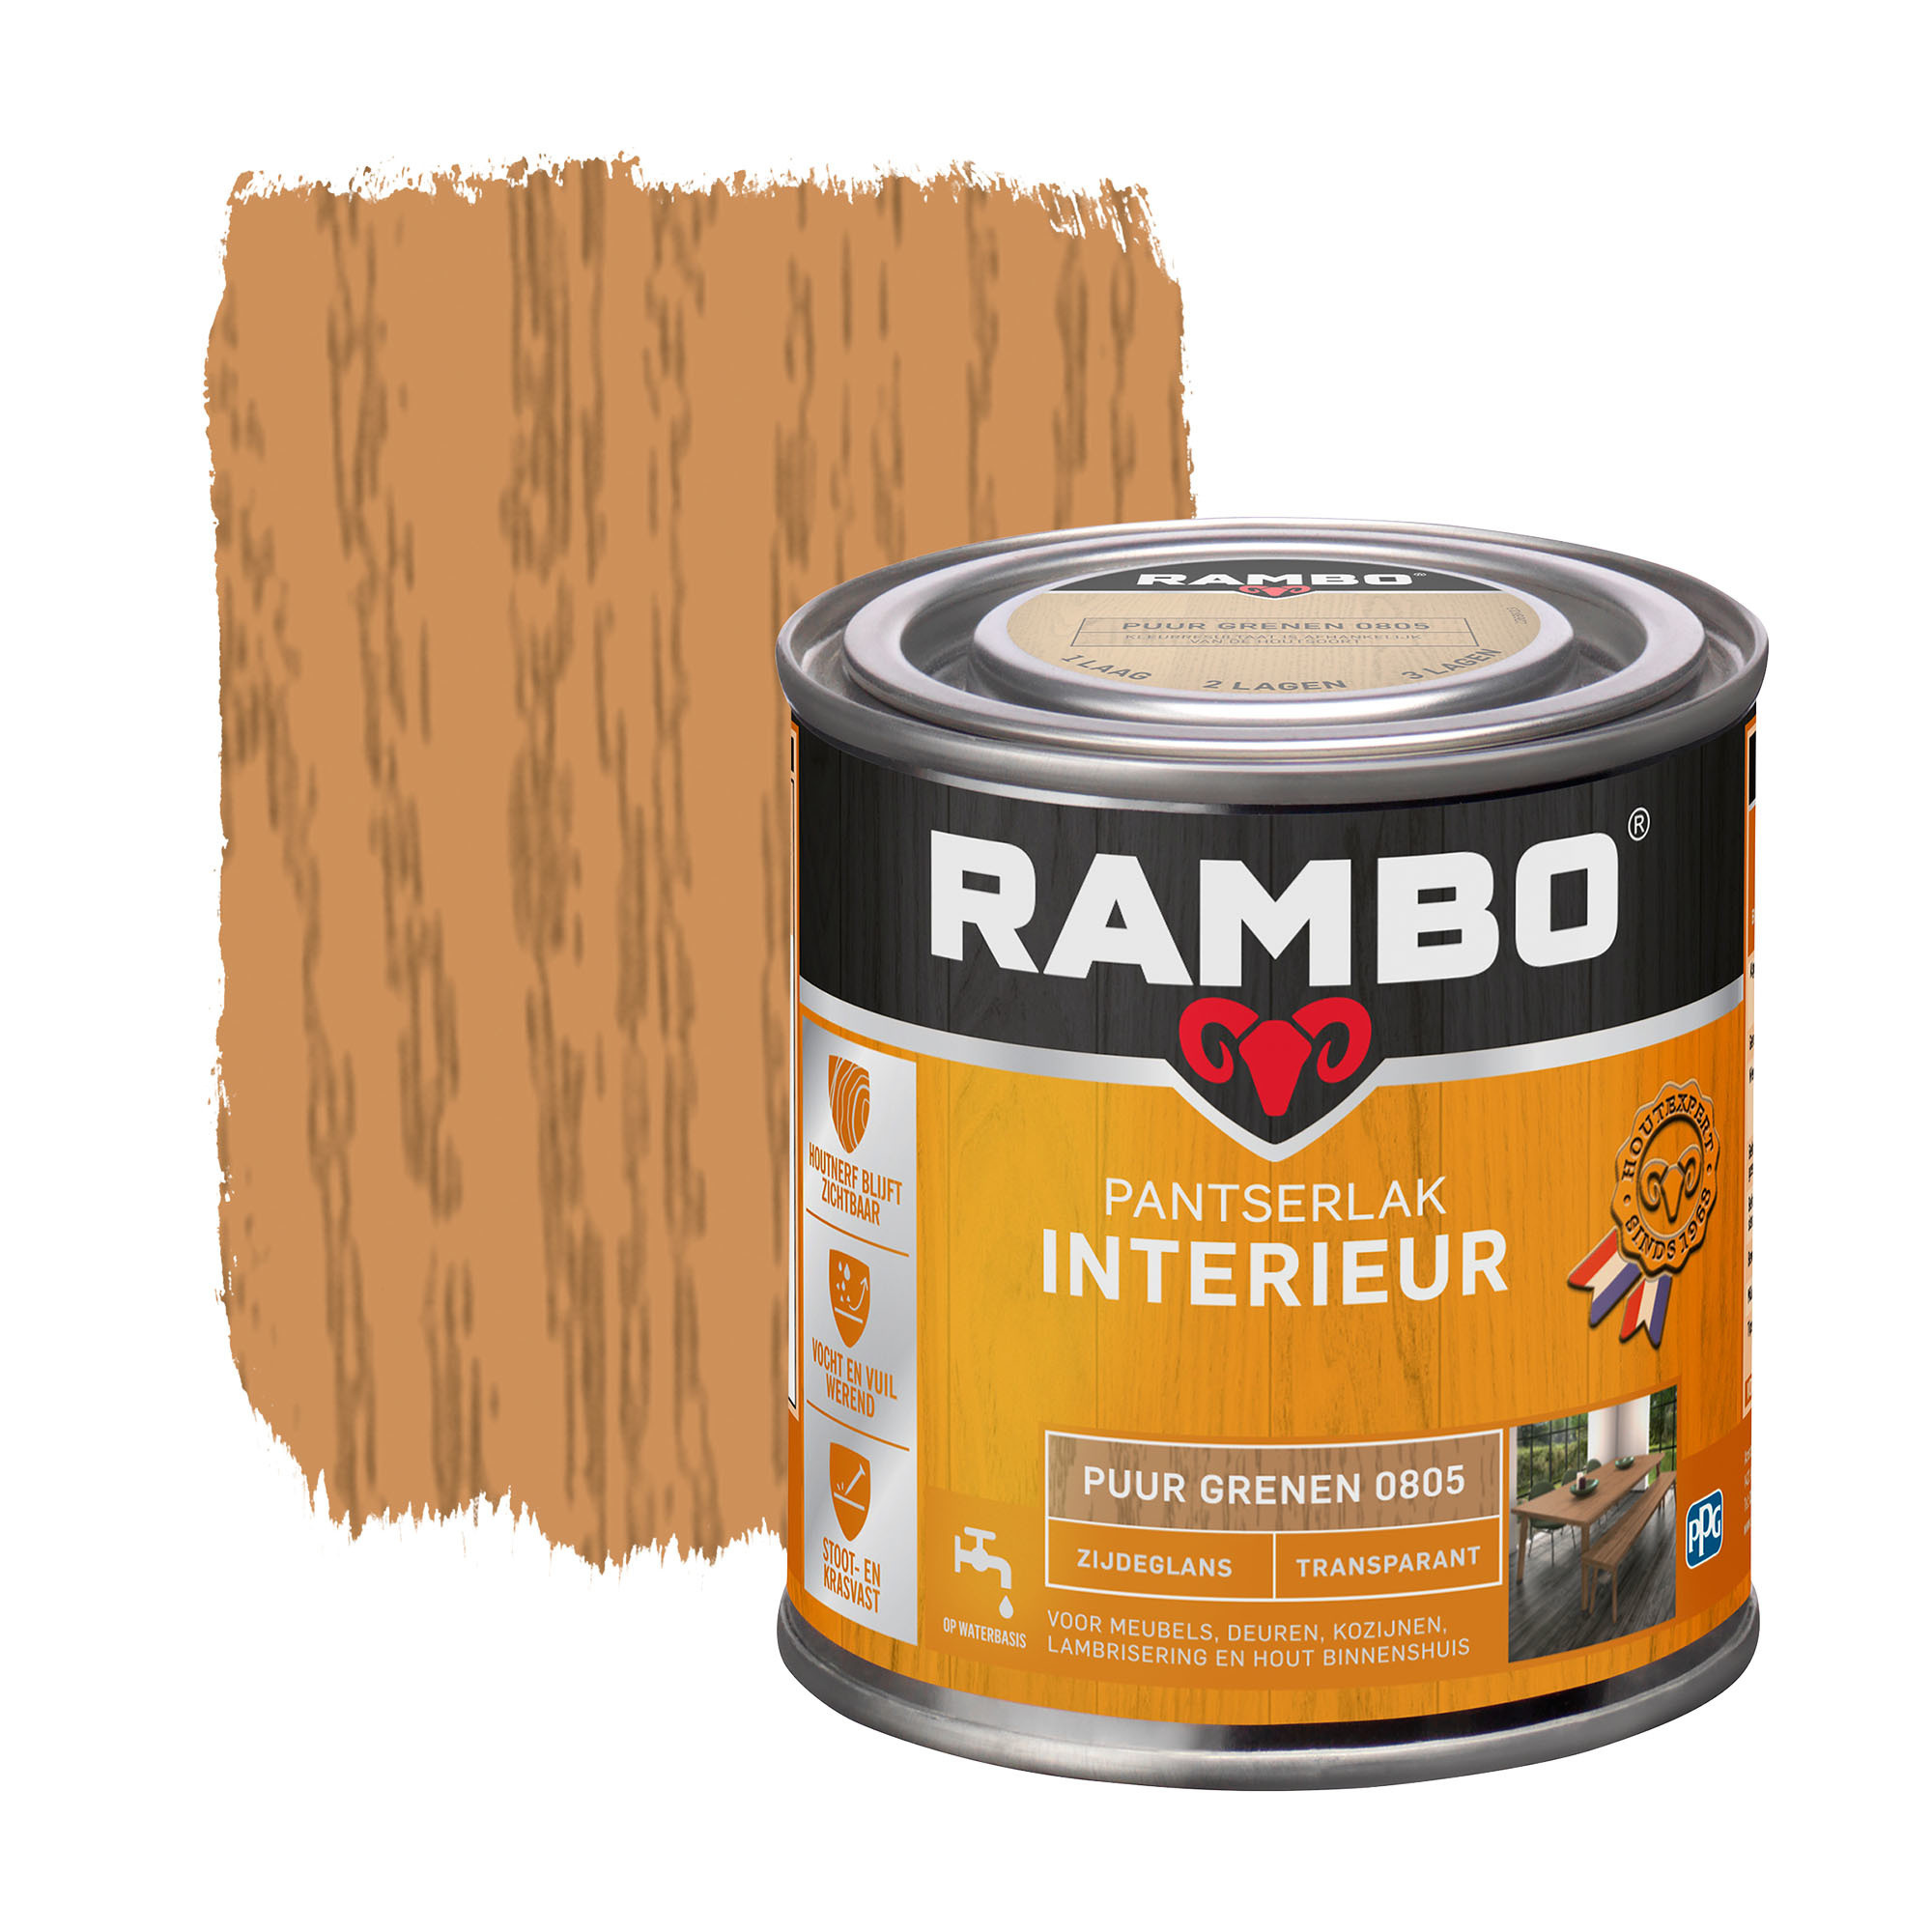 Rambo Pantserlak Interieur Transparant Zijdeglans - Puur grenen